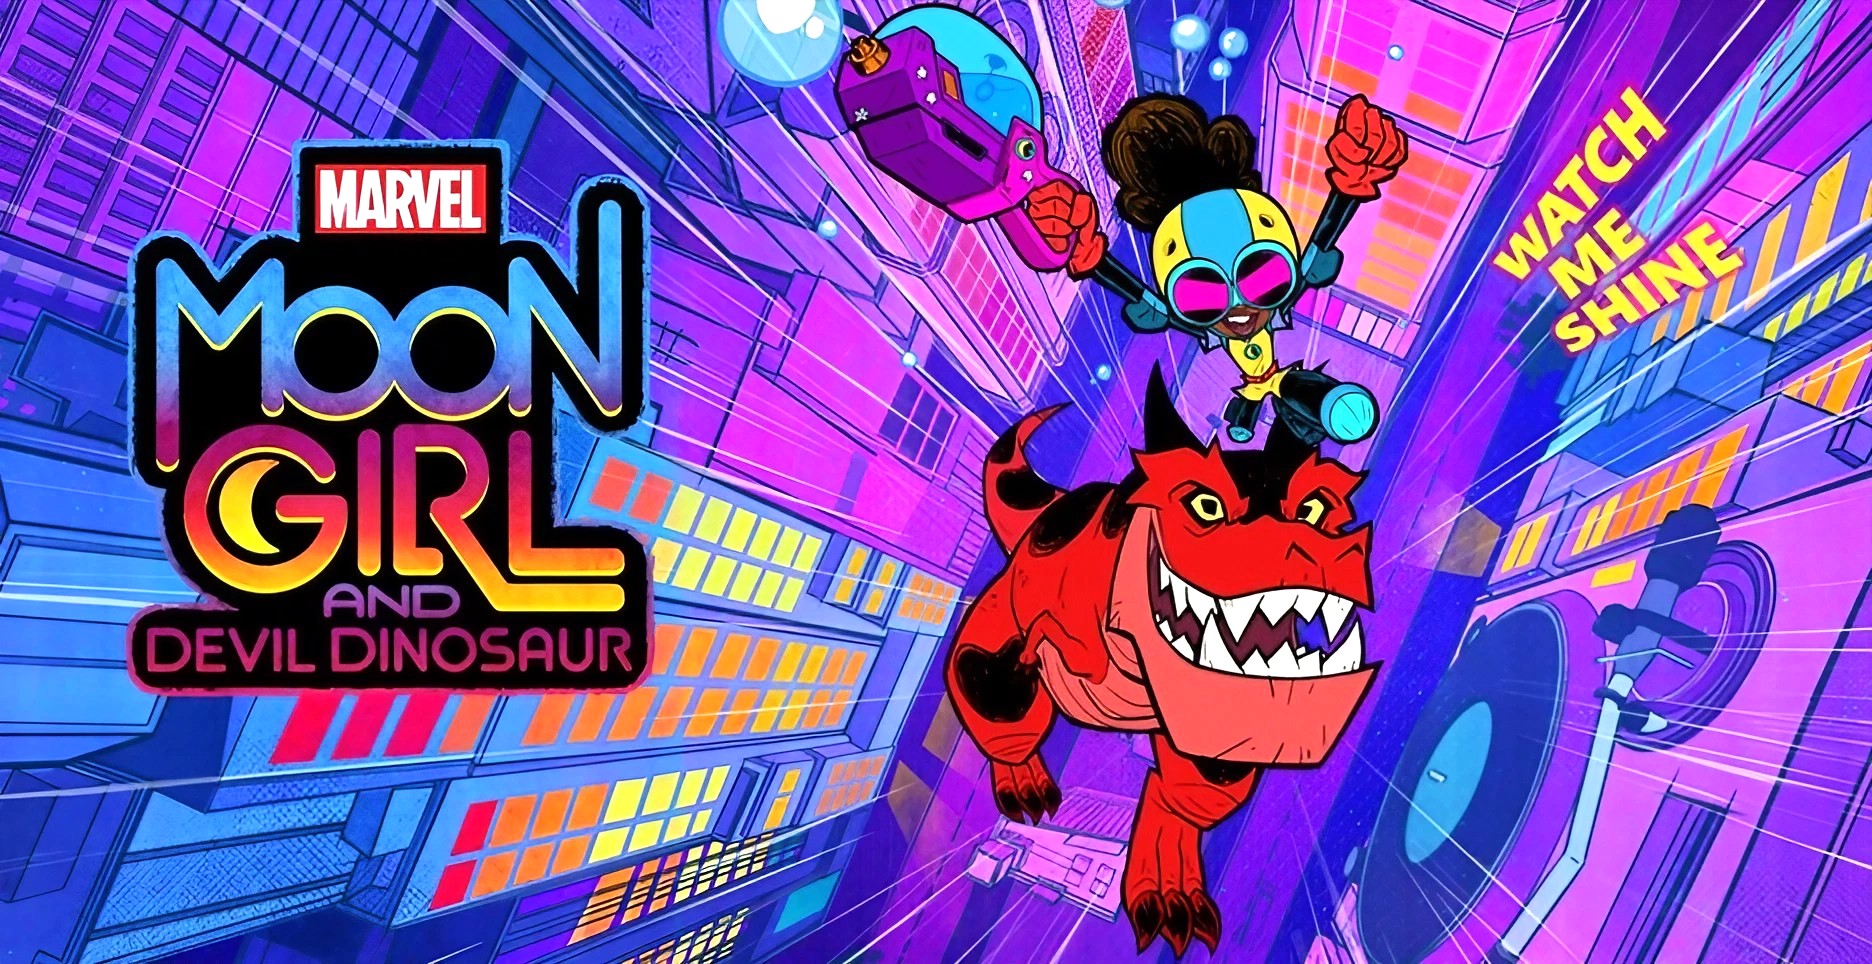 Moon girl and devil dinosaur season 2 release date